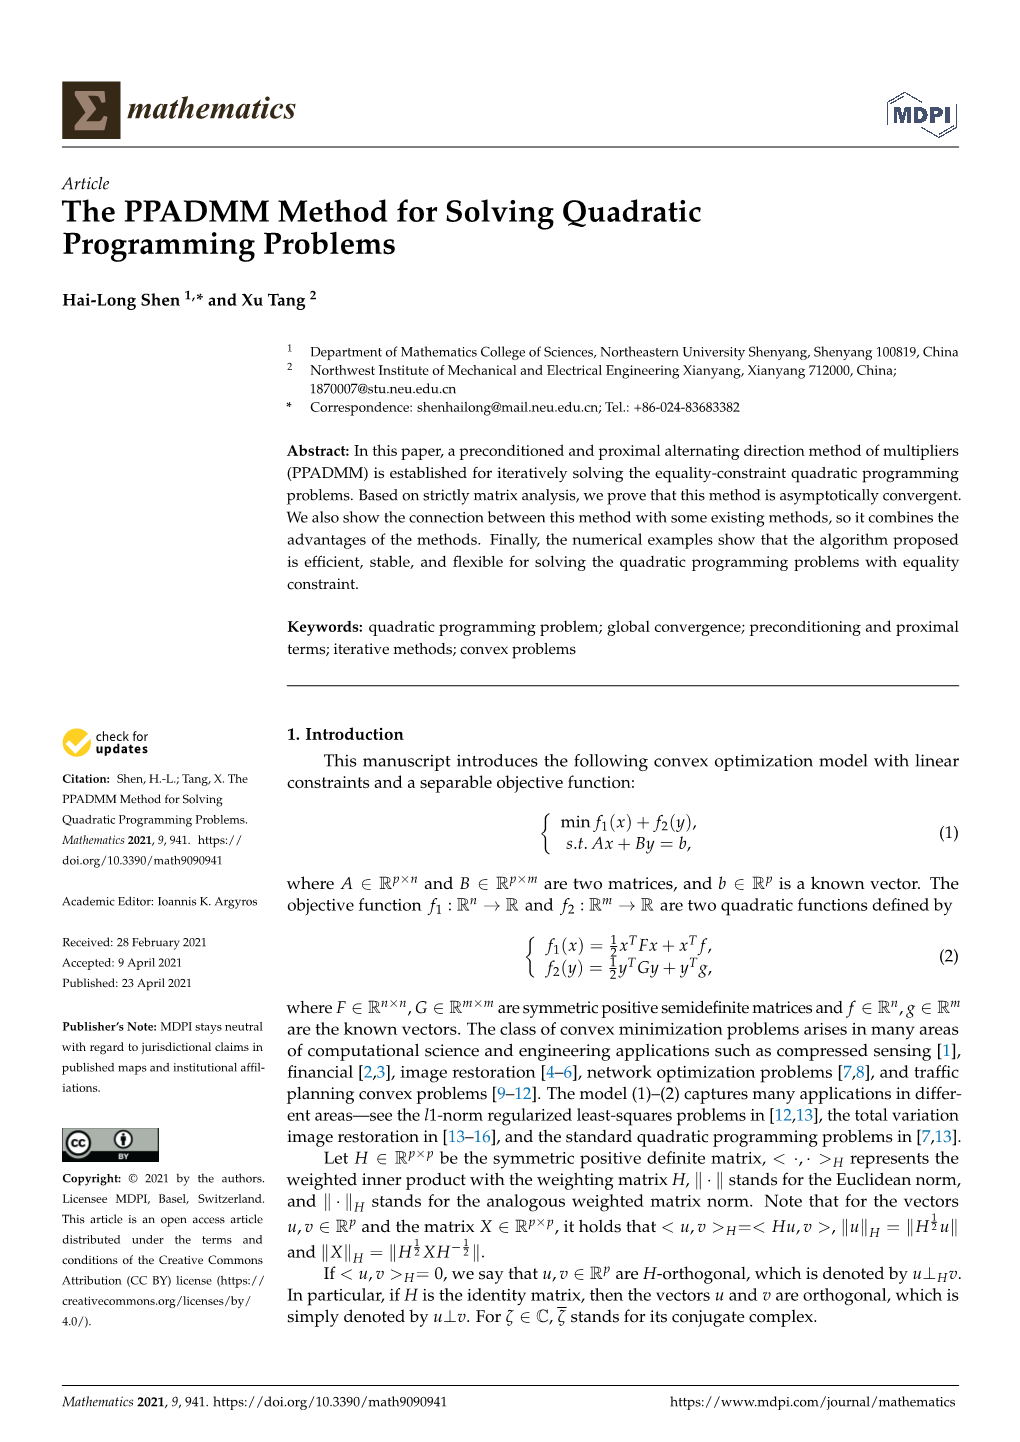 The PPADMM Method for Solving Quadratic Programming Problems